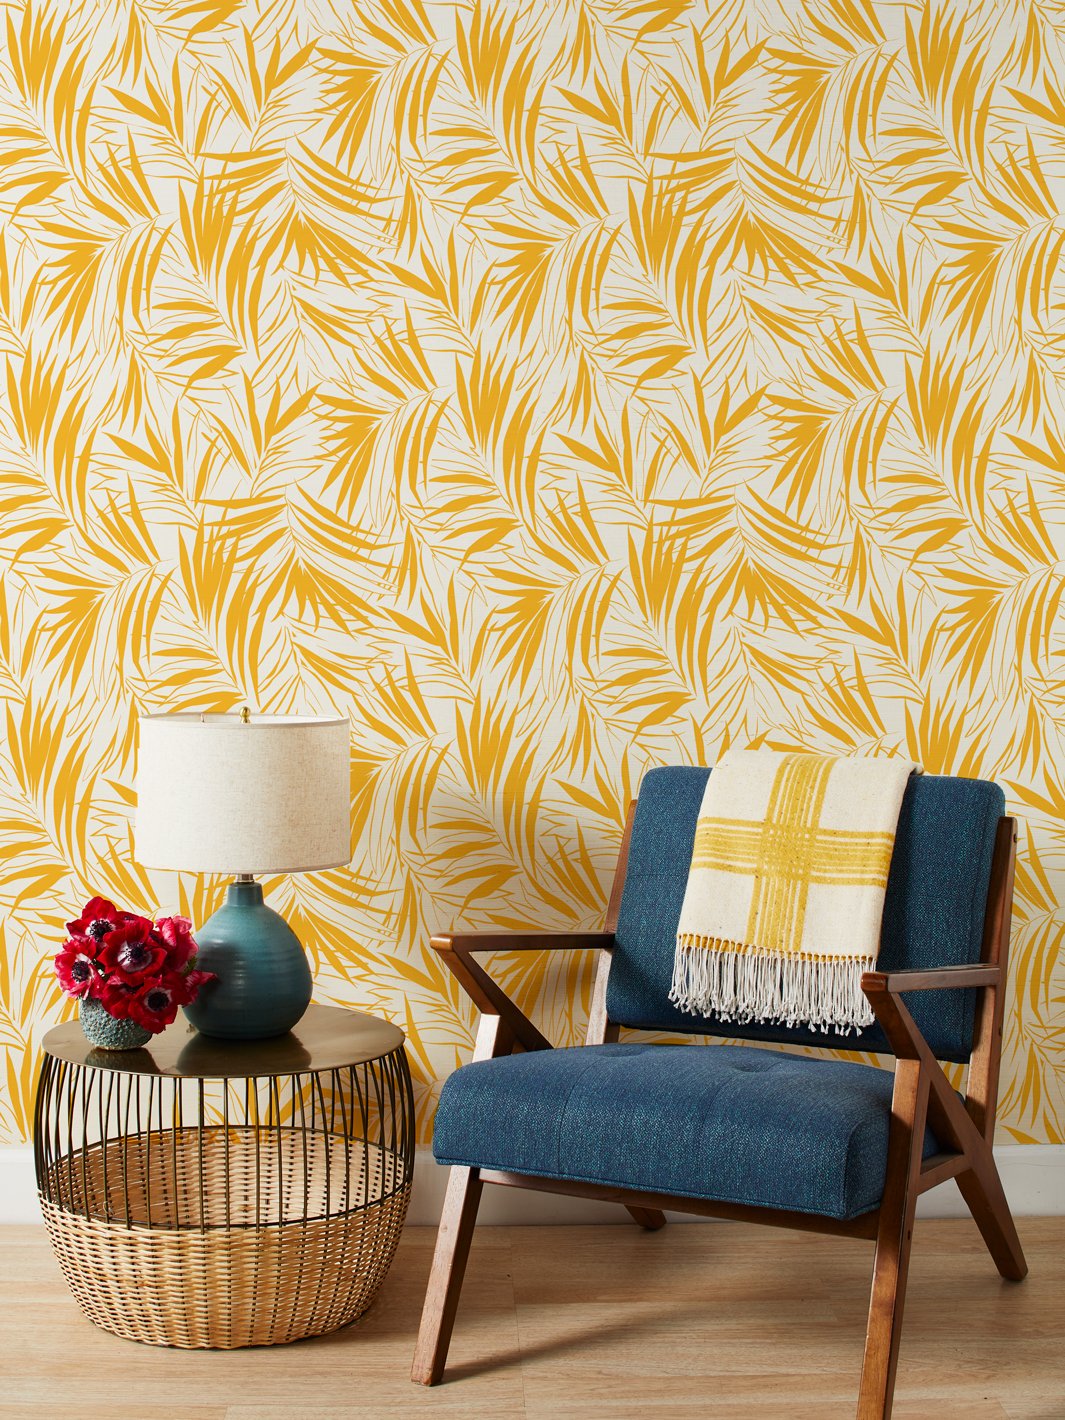 'Majesty Palm' Grasscloth' Wallpaper by Wallshoppe - Gold